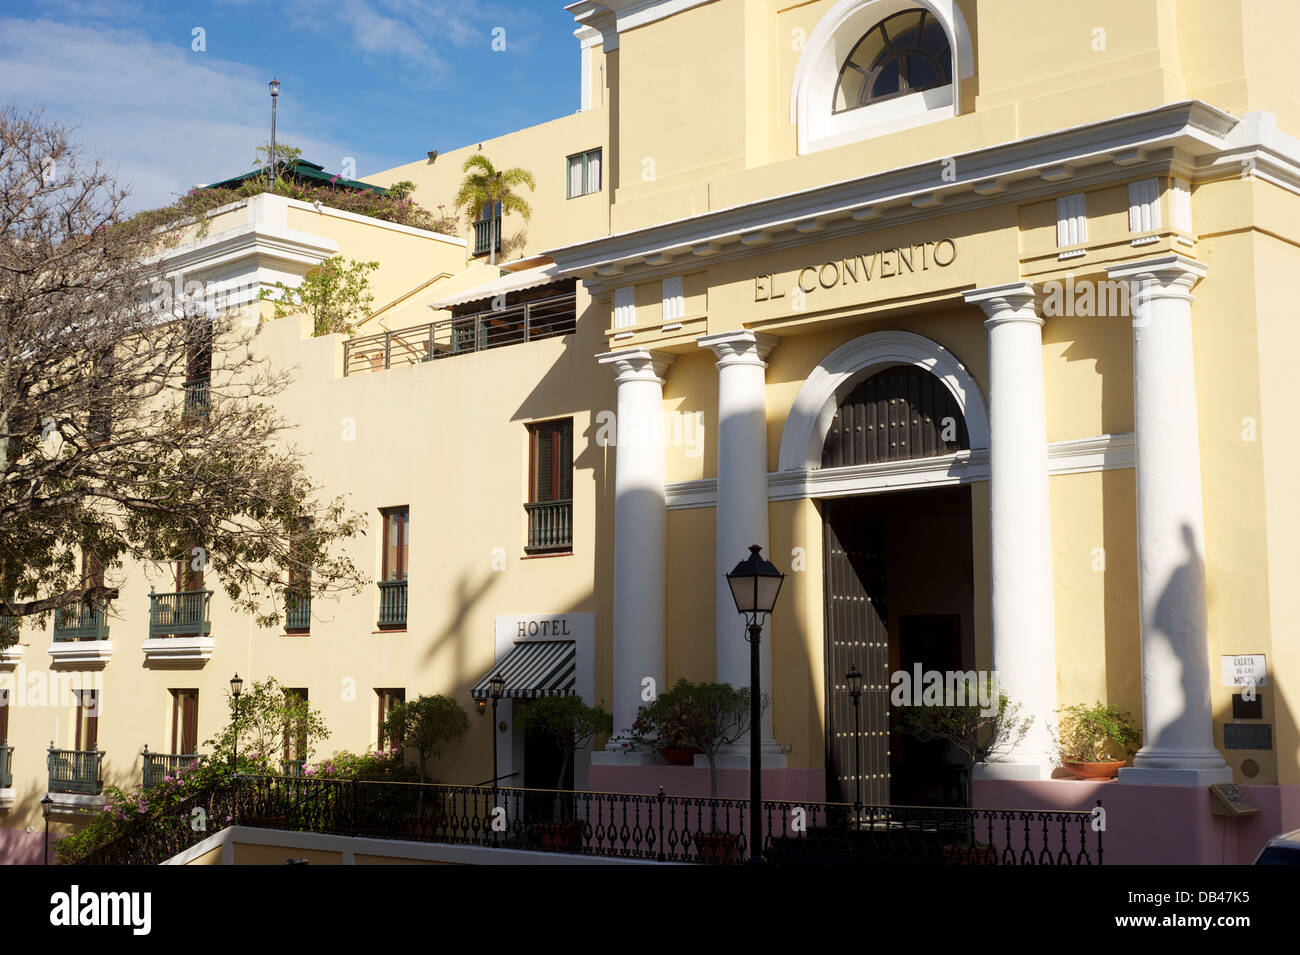 El Convento, San Juan, Puerto Rico Banque D'Images